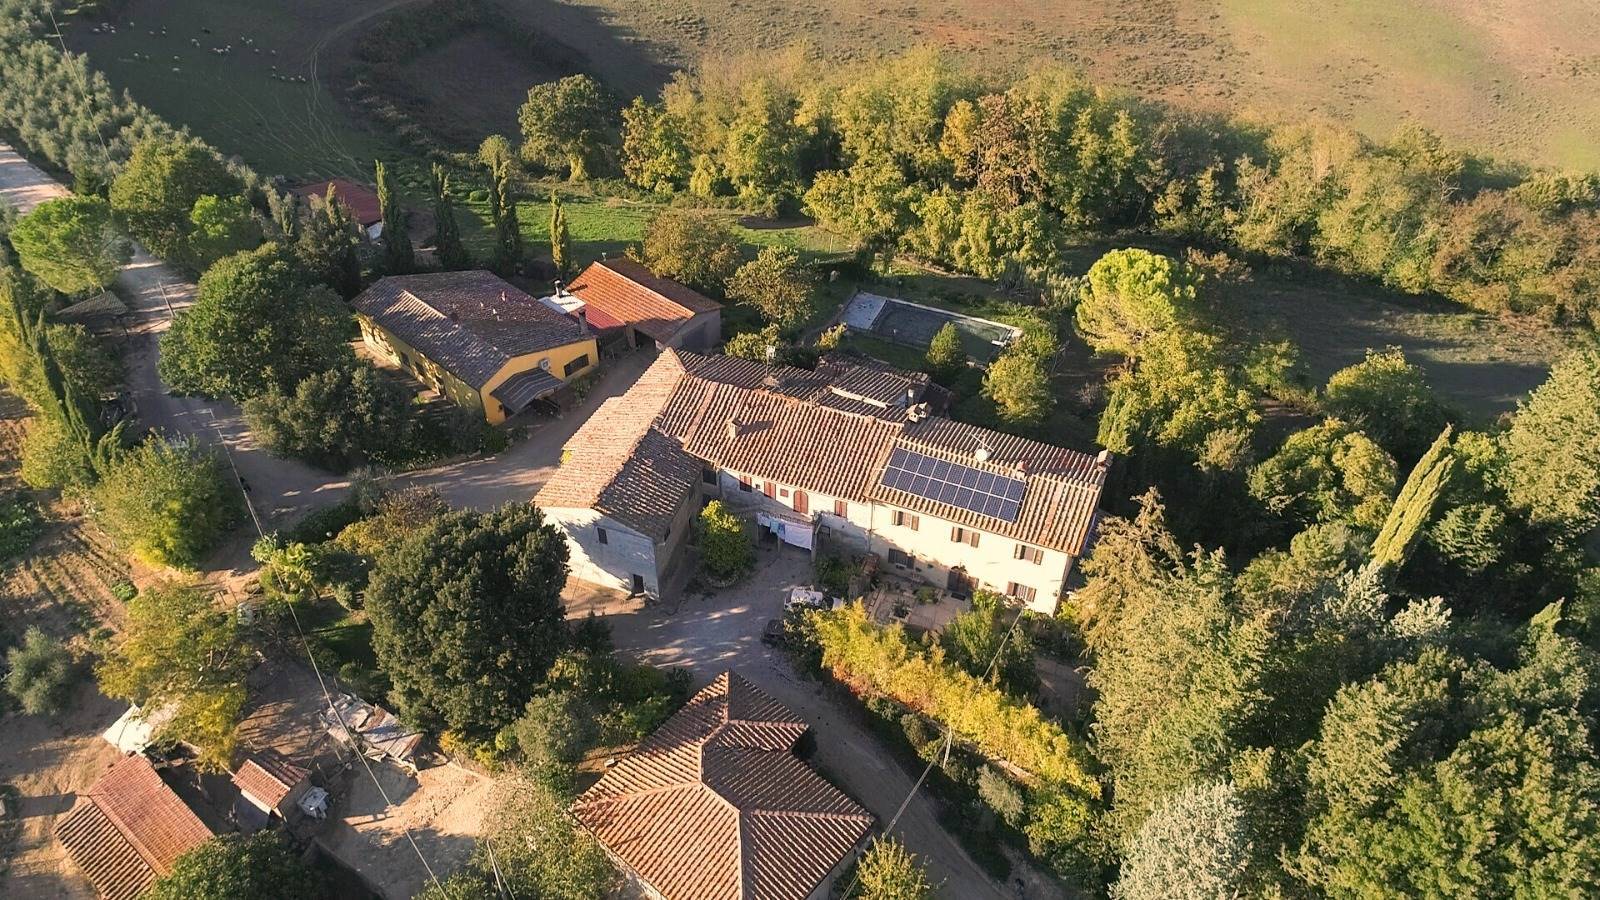 For sale cottage in quiet zone Poggibonsi Toscana